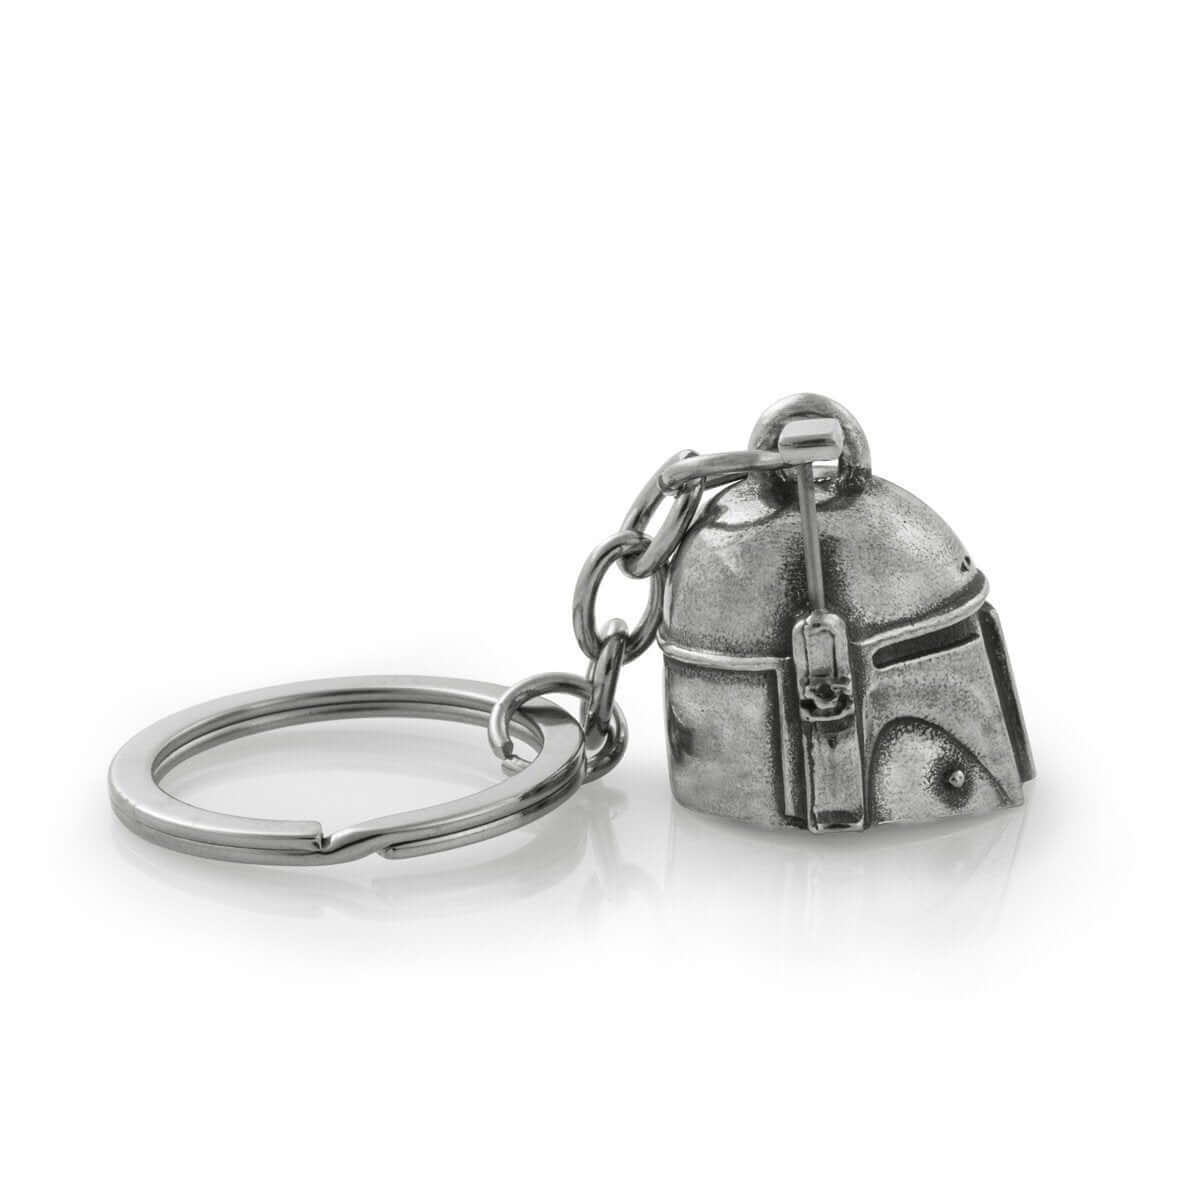 Star Wars Boba Fett Keychain - Collectible Gift